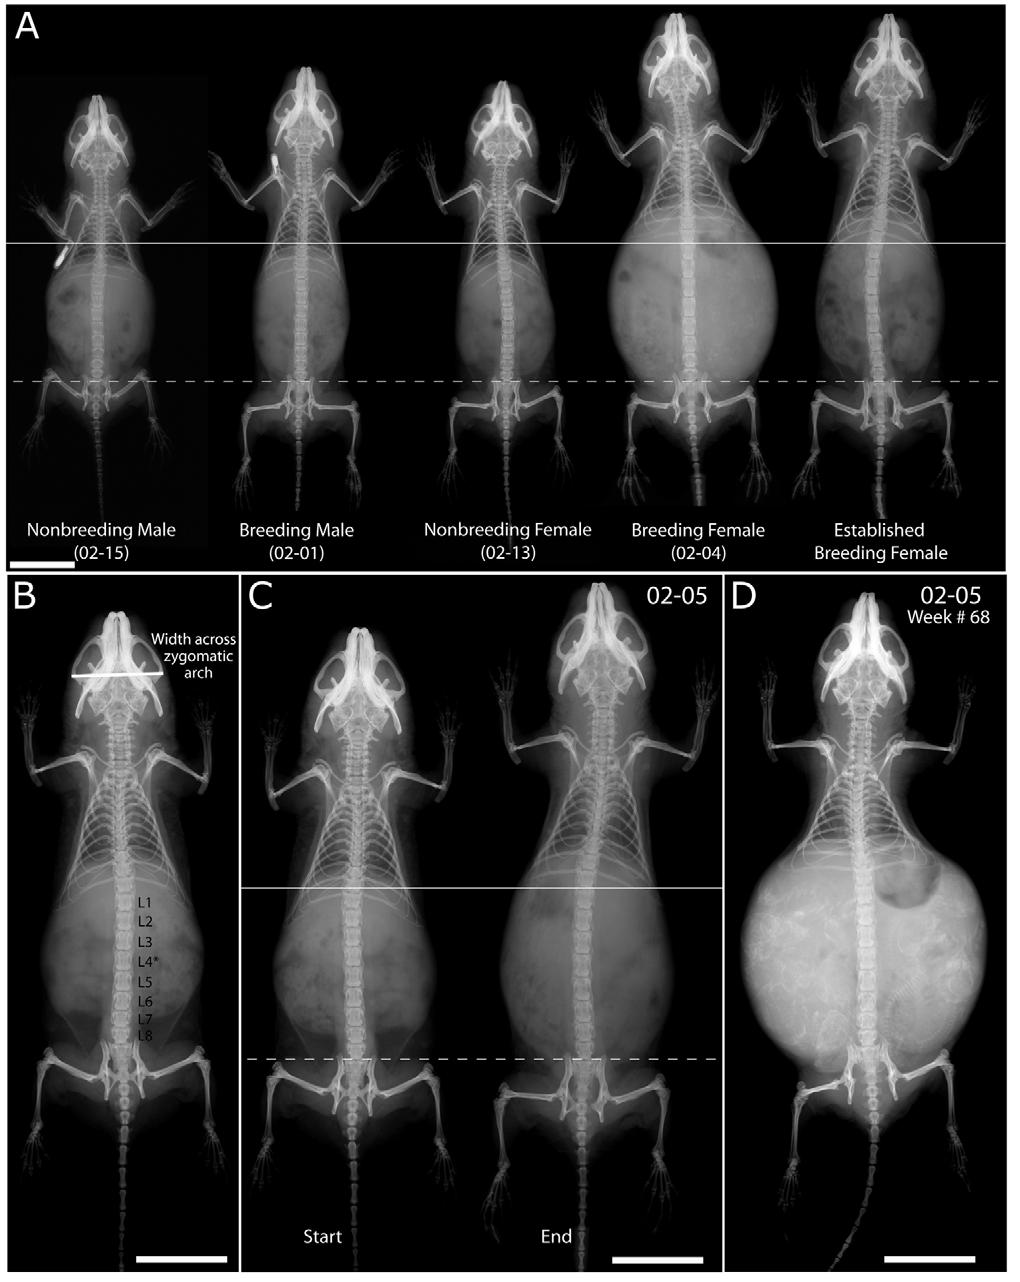 262 E. C. Henry, C. M. Dengler-Crish and K. C. Catania Fig. 1. Radiographs of the naked molerats. (A) Relative sizes of mole-rats examined in the study.